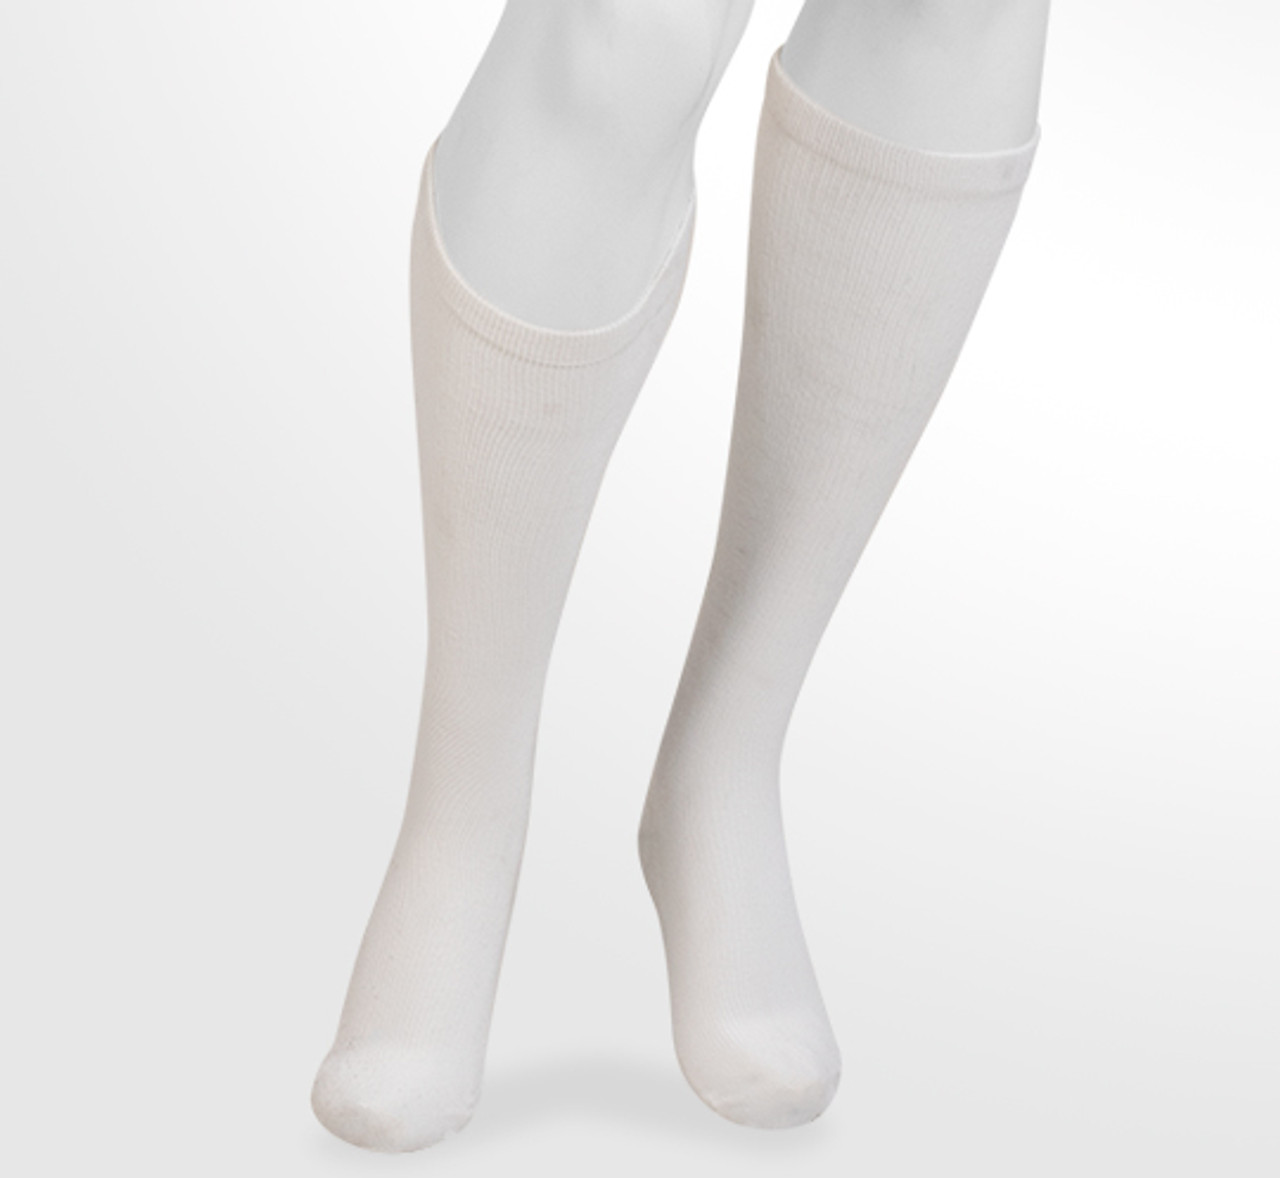 SUPERHOMUSE Pressure Compression Socks Knee High Support Socks 30-40 mmhg  Leg Pain Relief Socks Stockings Varicose Vein Relief Pain Support Socks - 5  Colors 